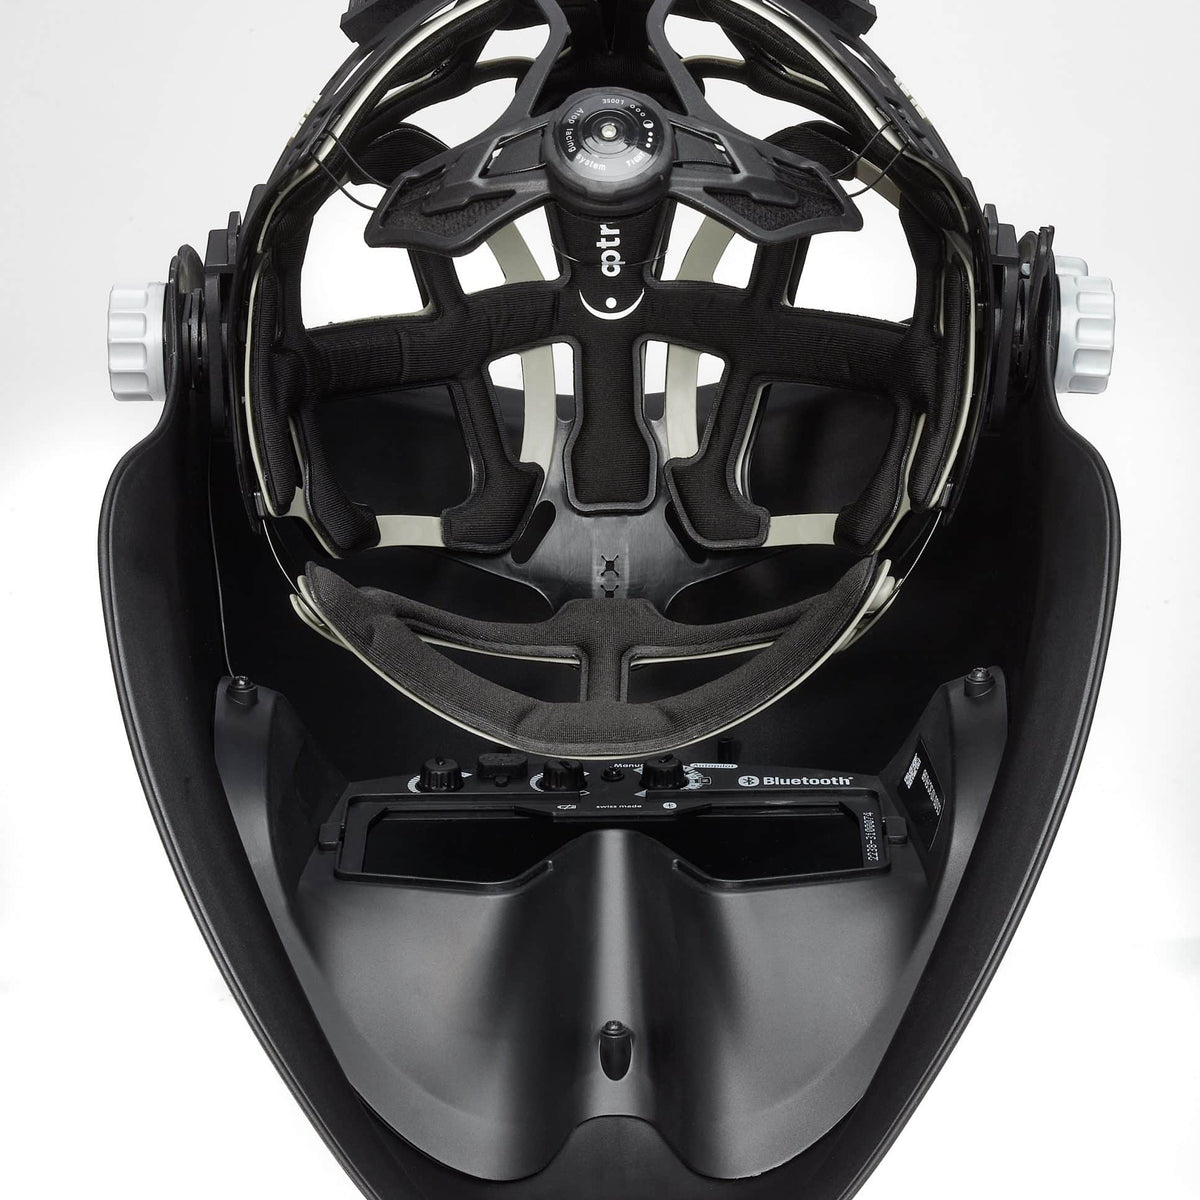 Precisionmaxx Welding Helmet - with Bluetooth Technology